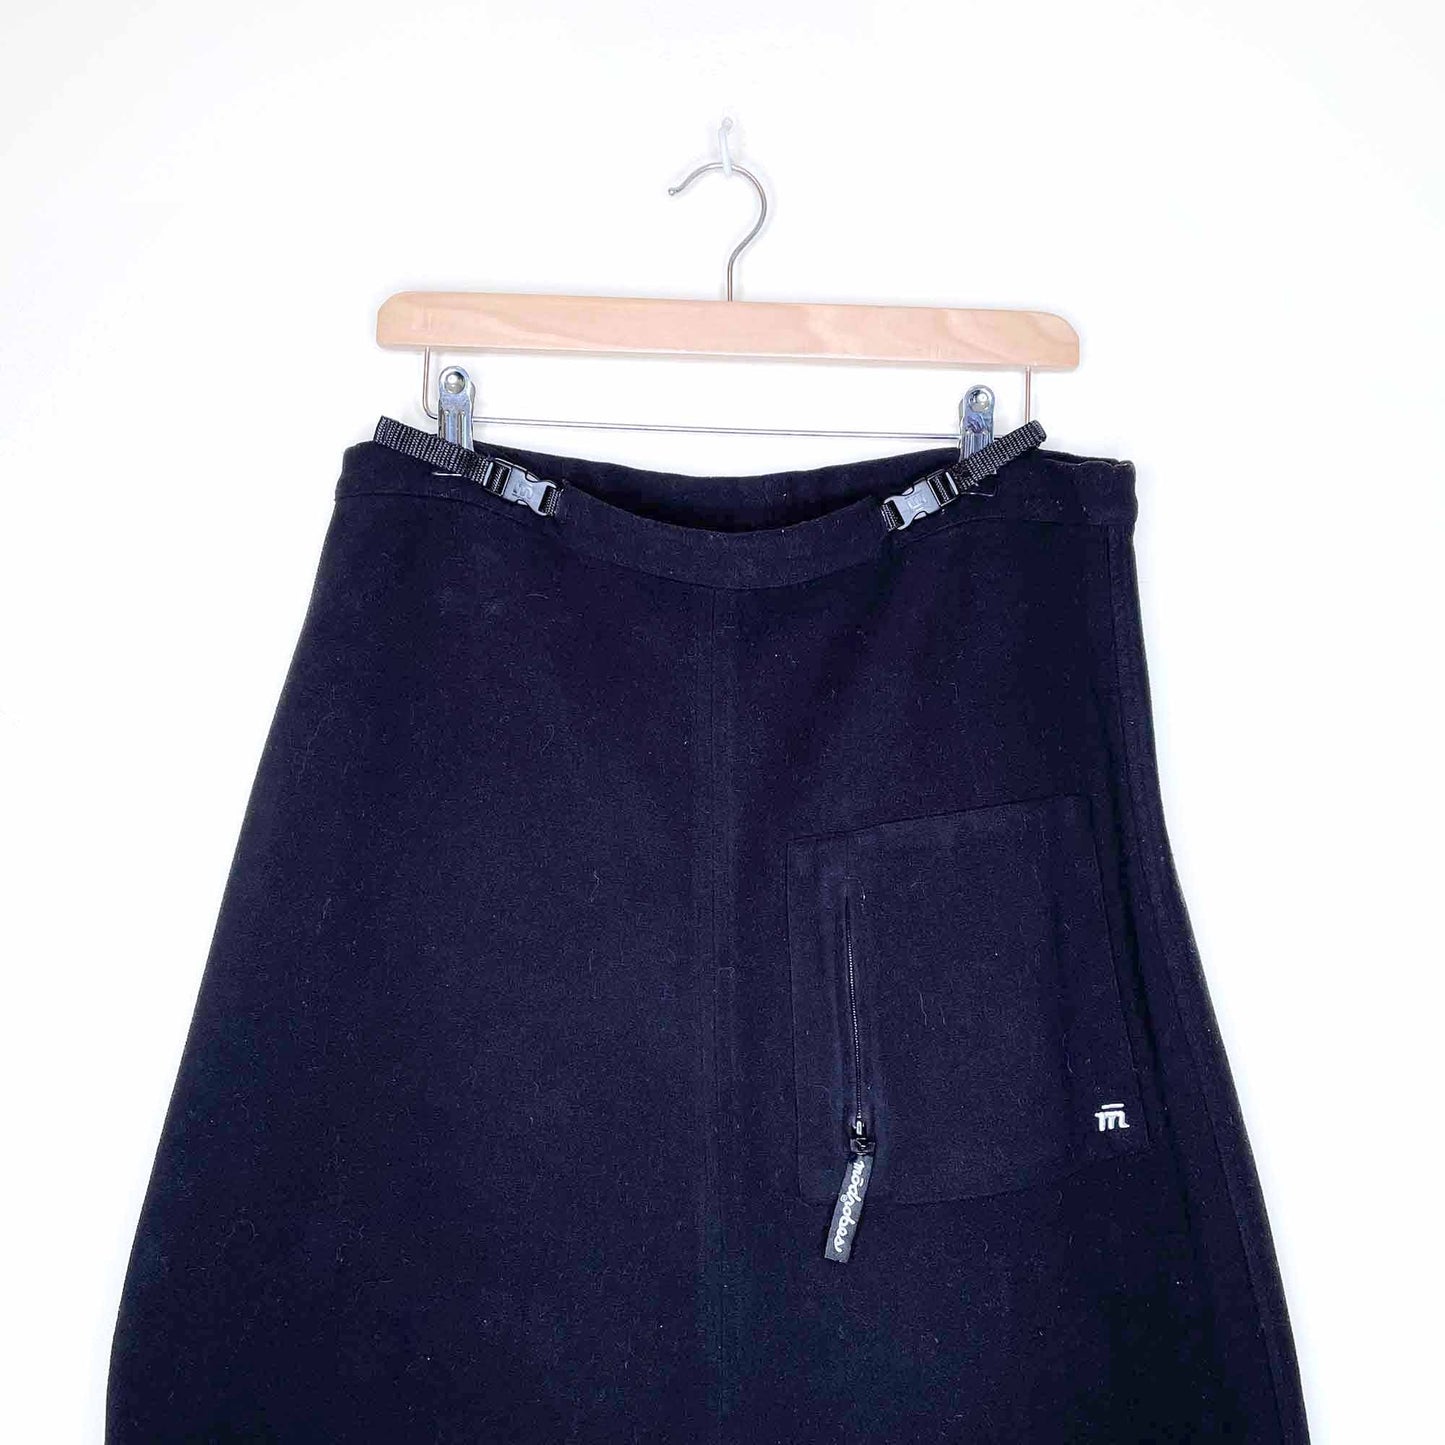 vintage y2k modrobes fleece maxi skirt - size large